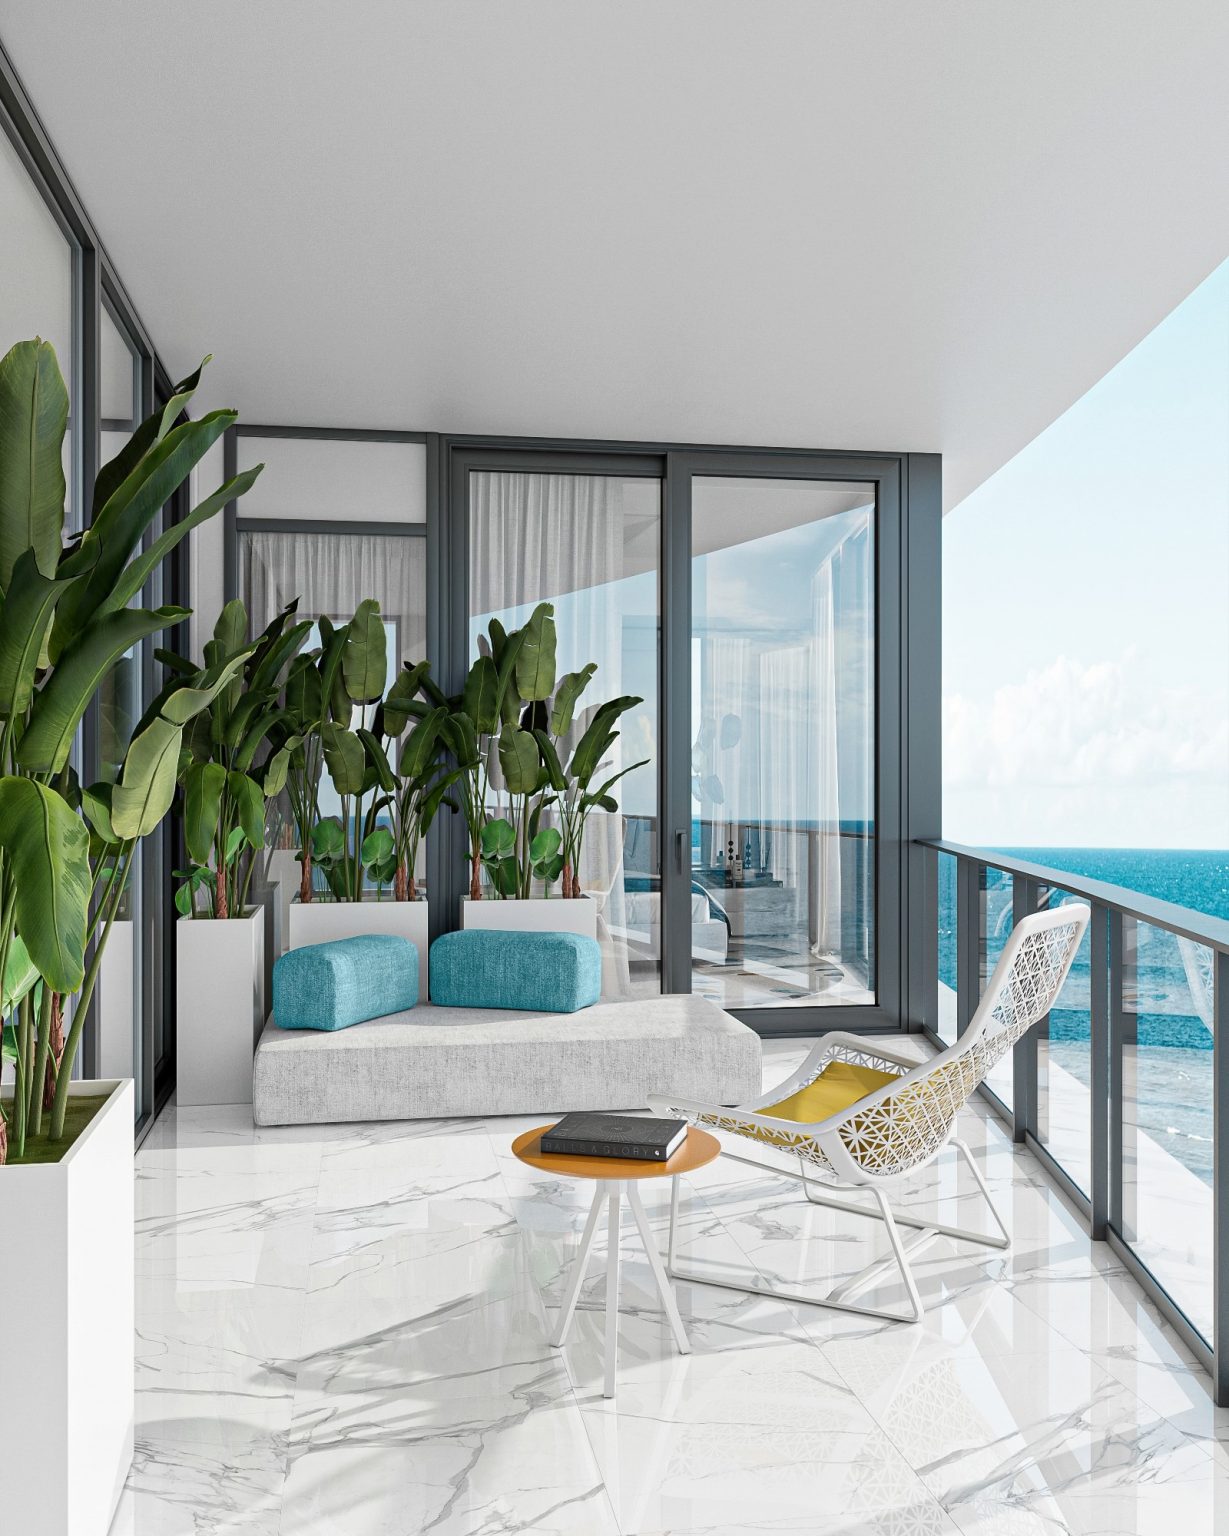 Residential Interior Design Idea - Project release 2021. Phone : +1 (954) 955-2278, Email : natalya@starinova.com